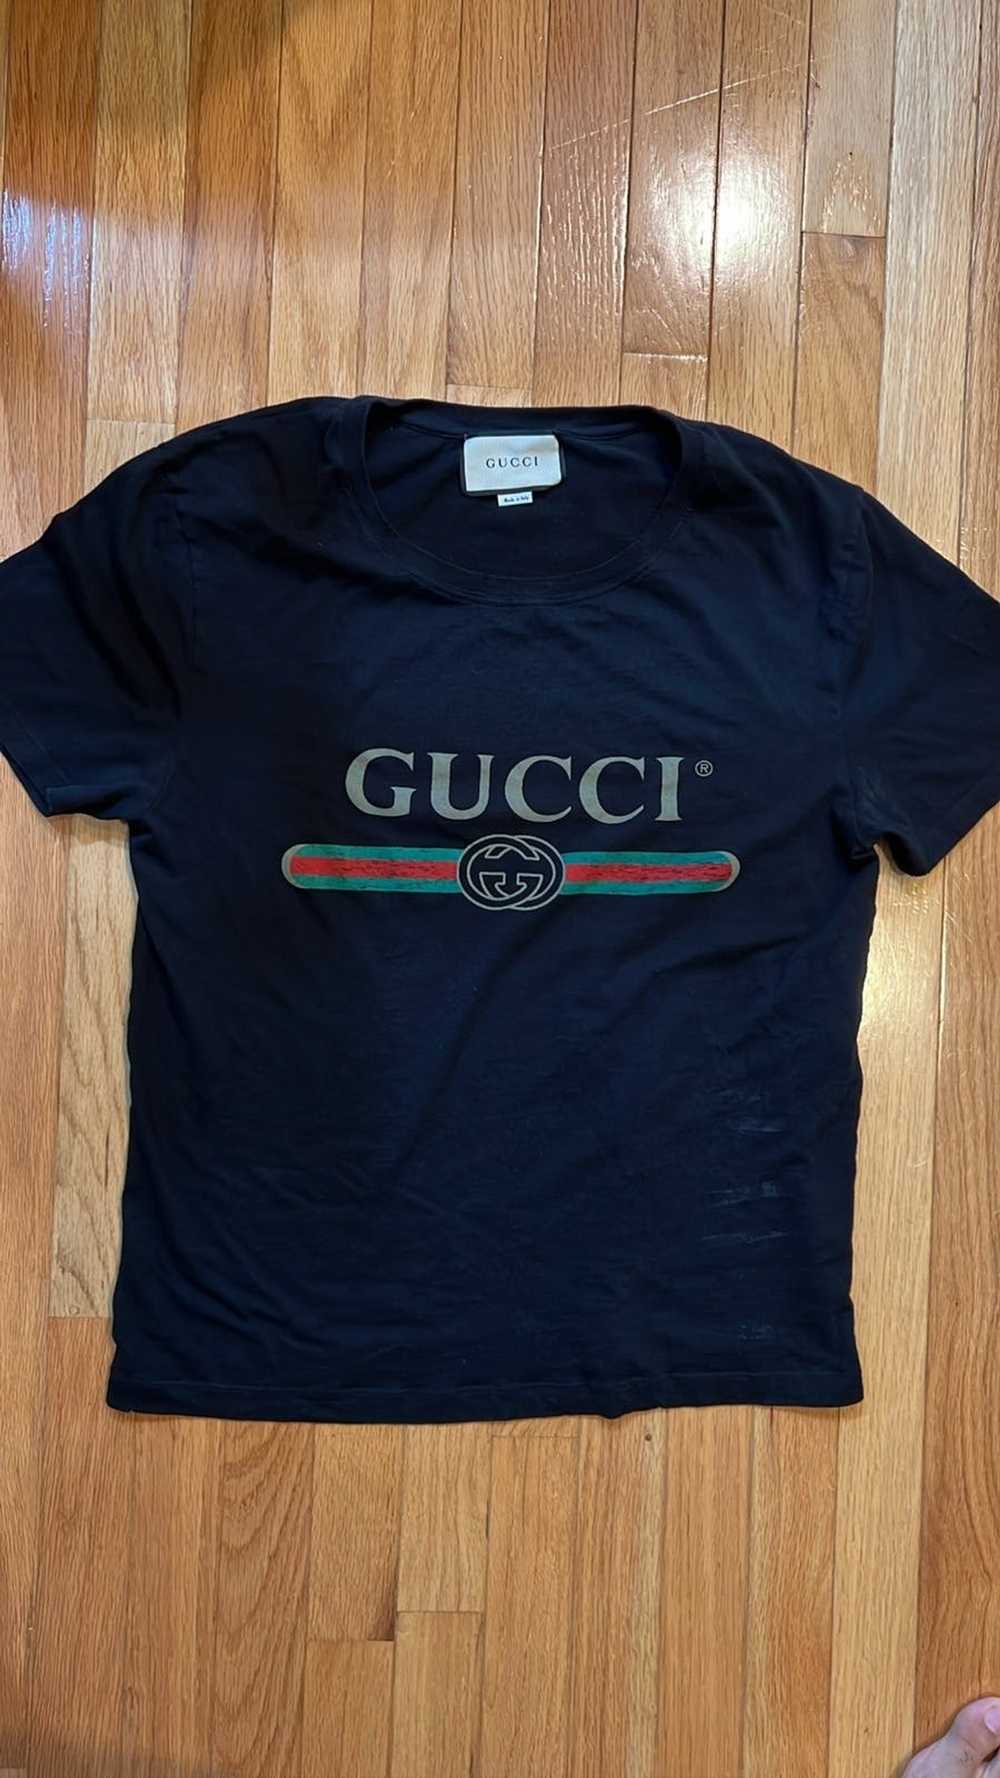 Gucci Gucci t-shirt - image 1